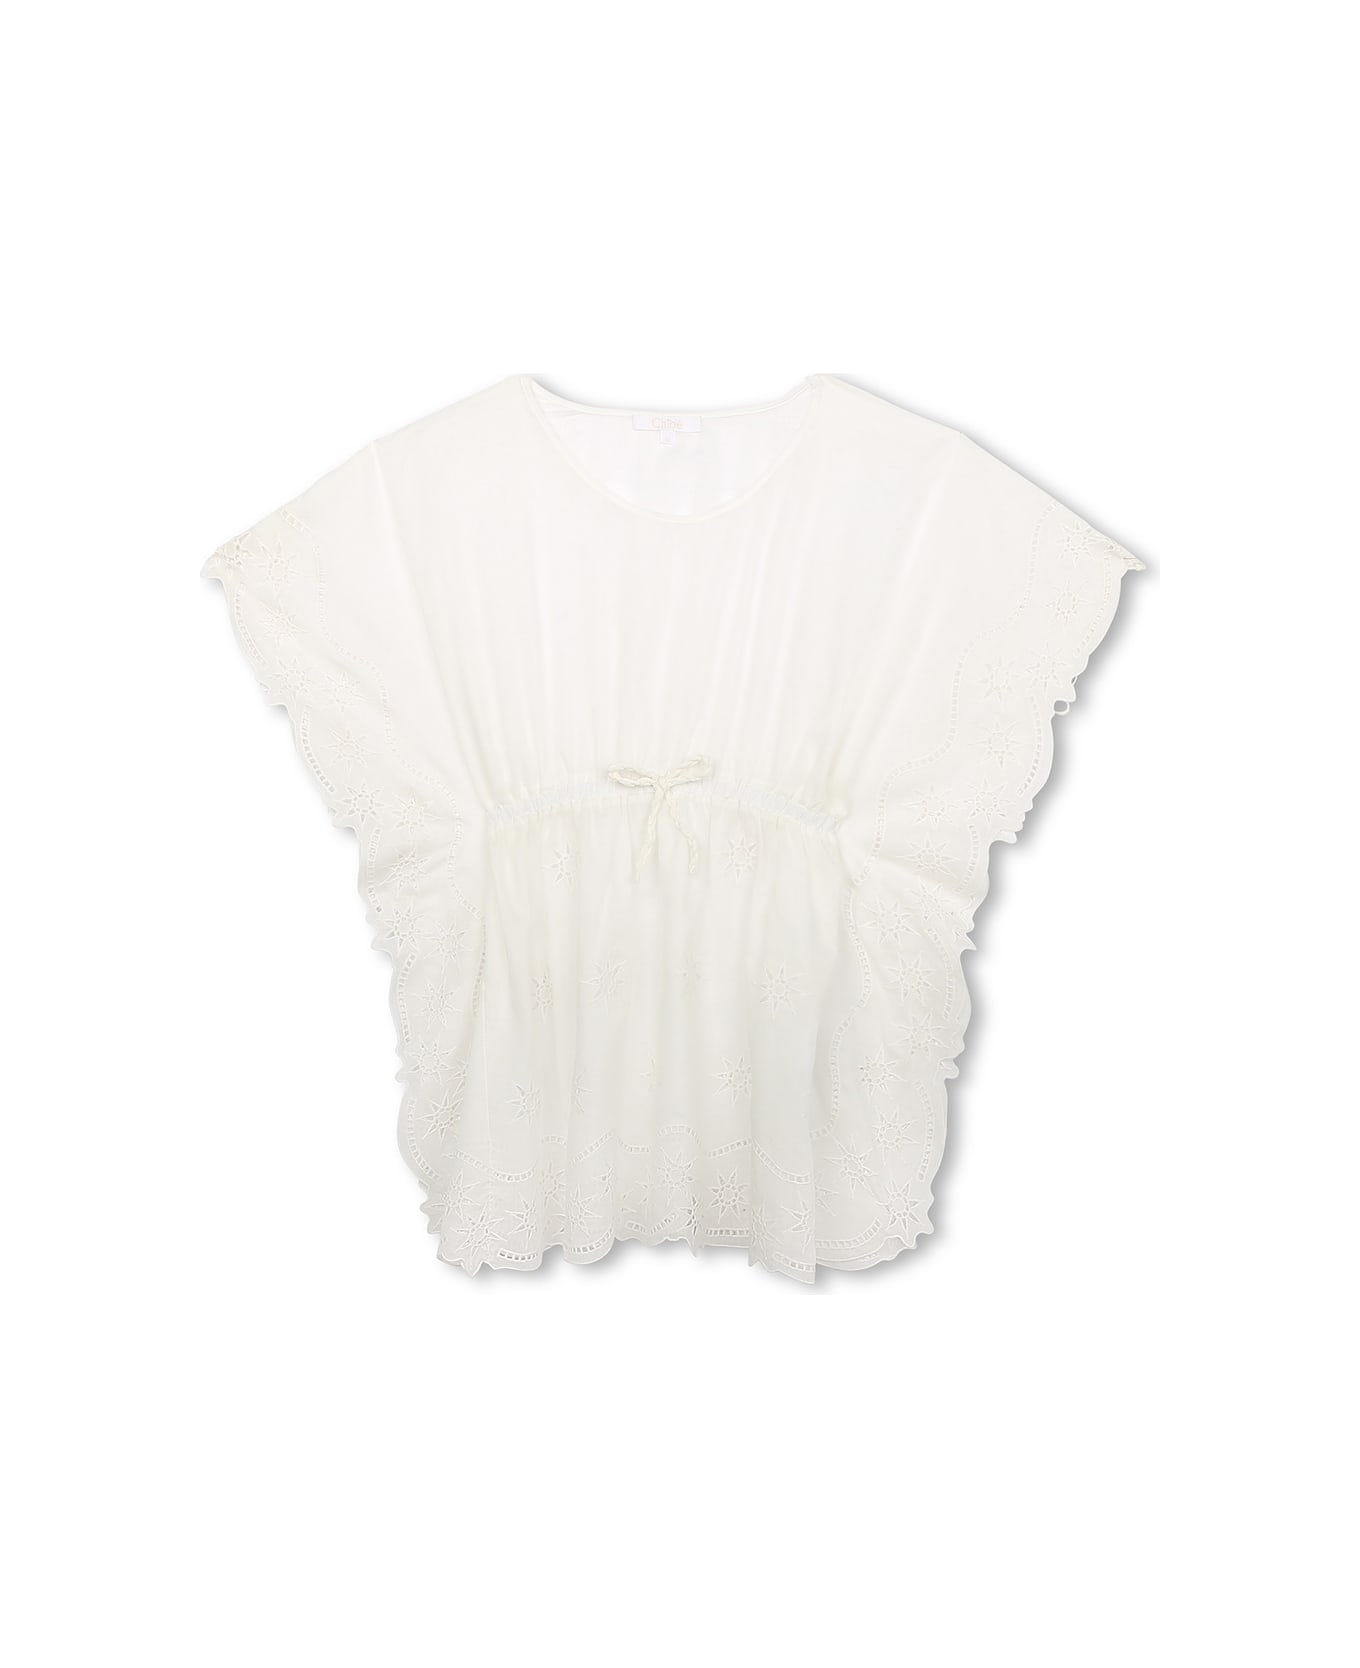 Chloé White Sleeveless Dress With Ruffles And Stars - White